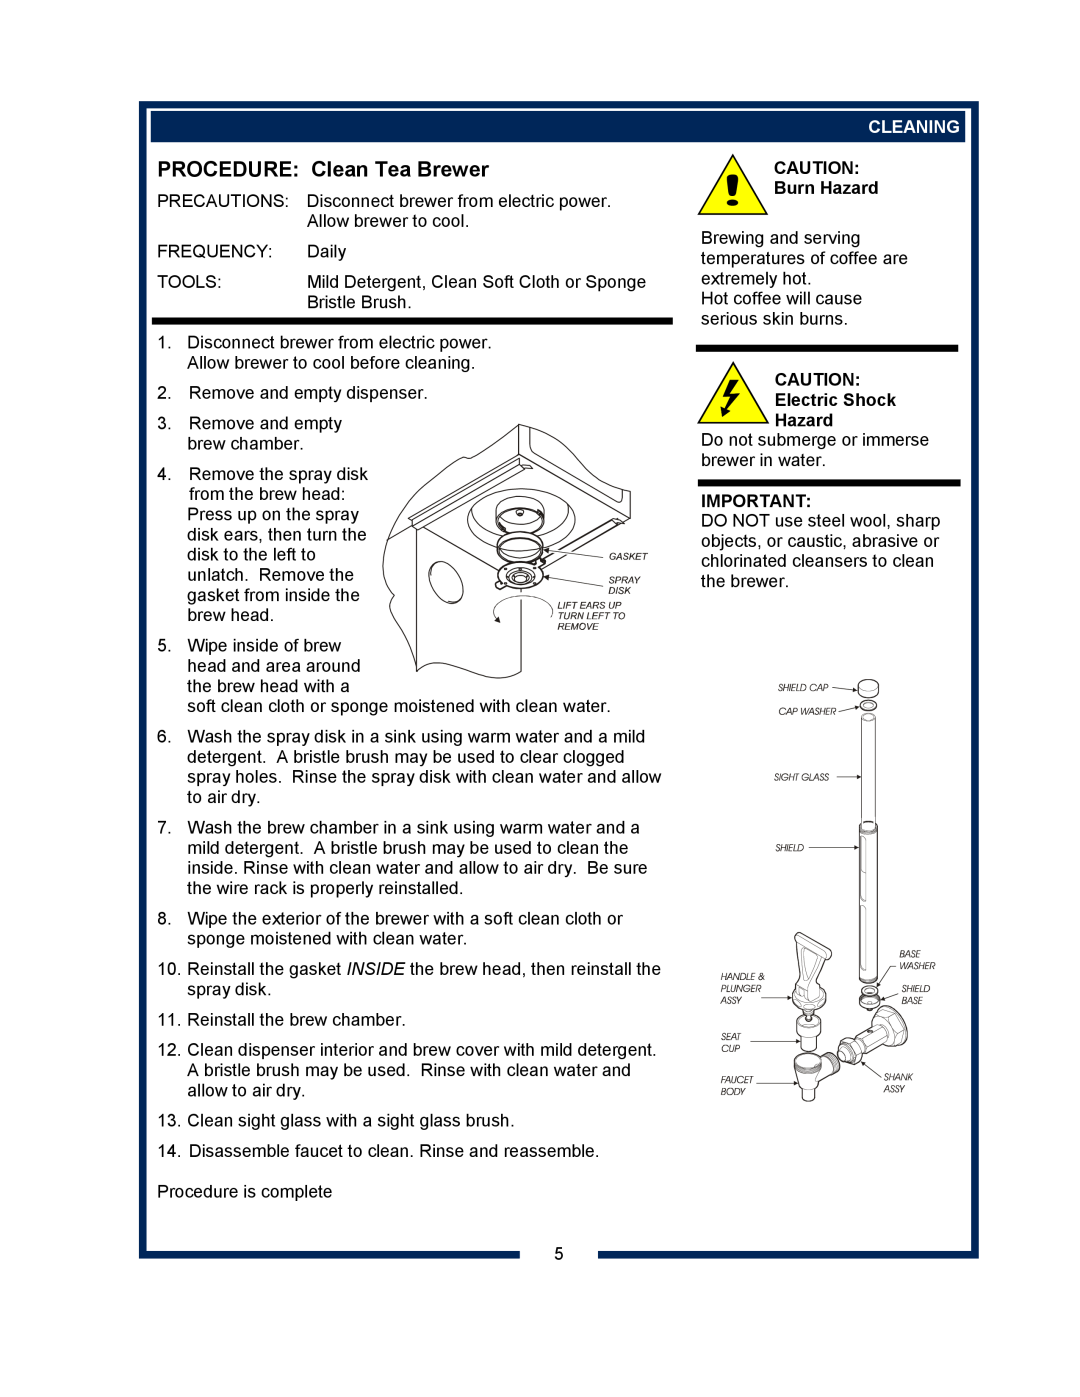 Bloomfield 8748 manual PROCEDURE Clean Tea Brewer, Cleaning, Burn Hazard, Electric Shock Hazard 